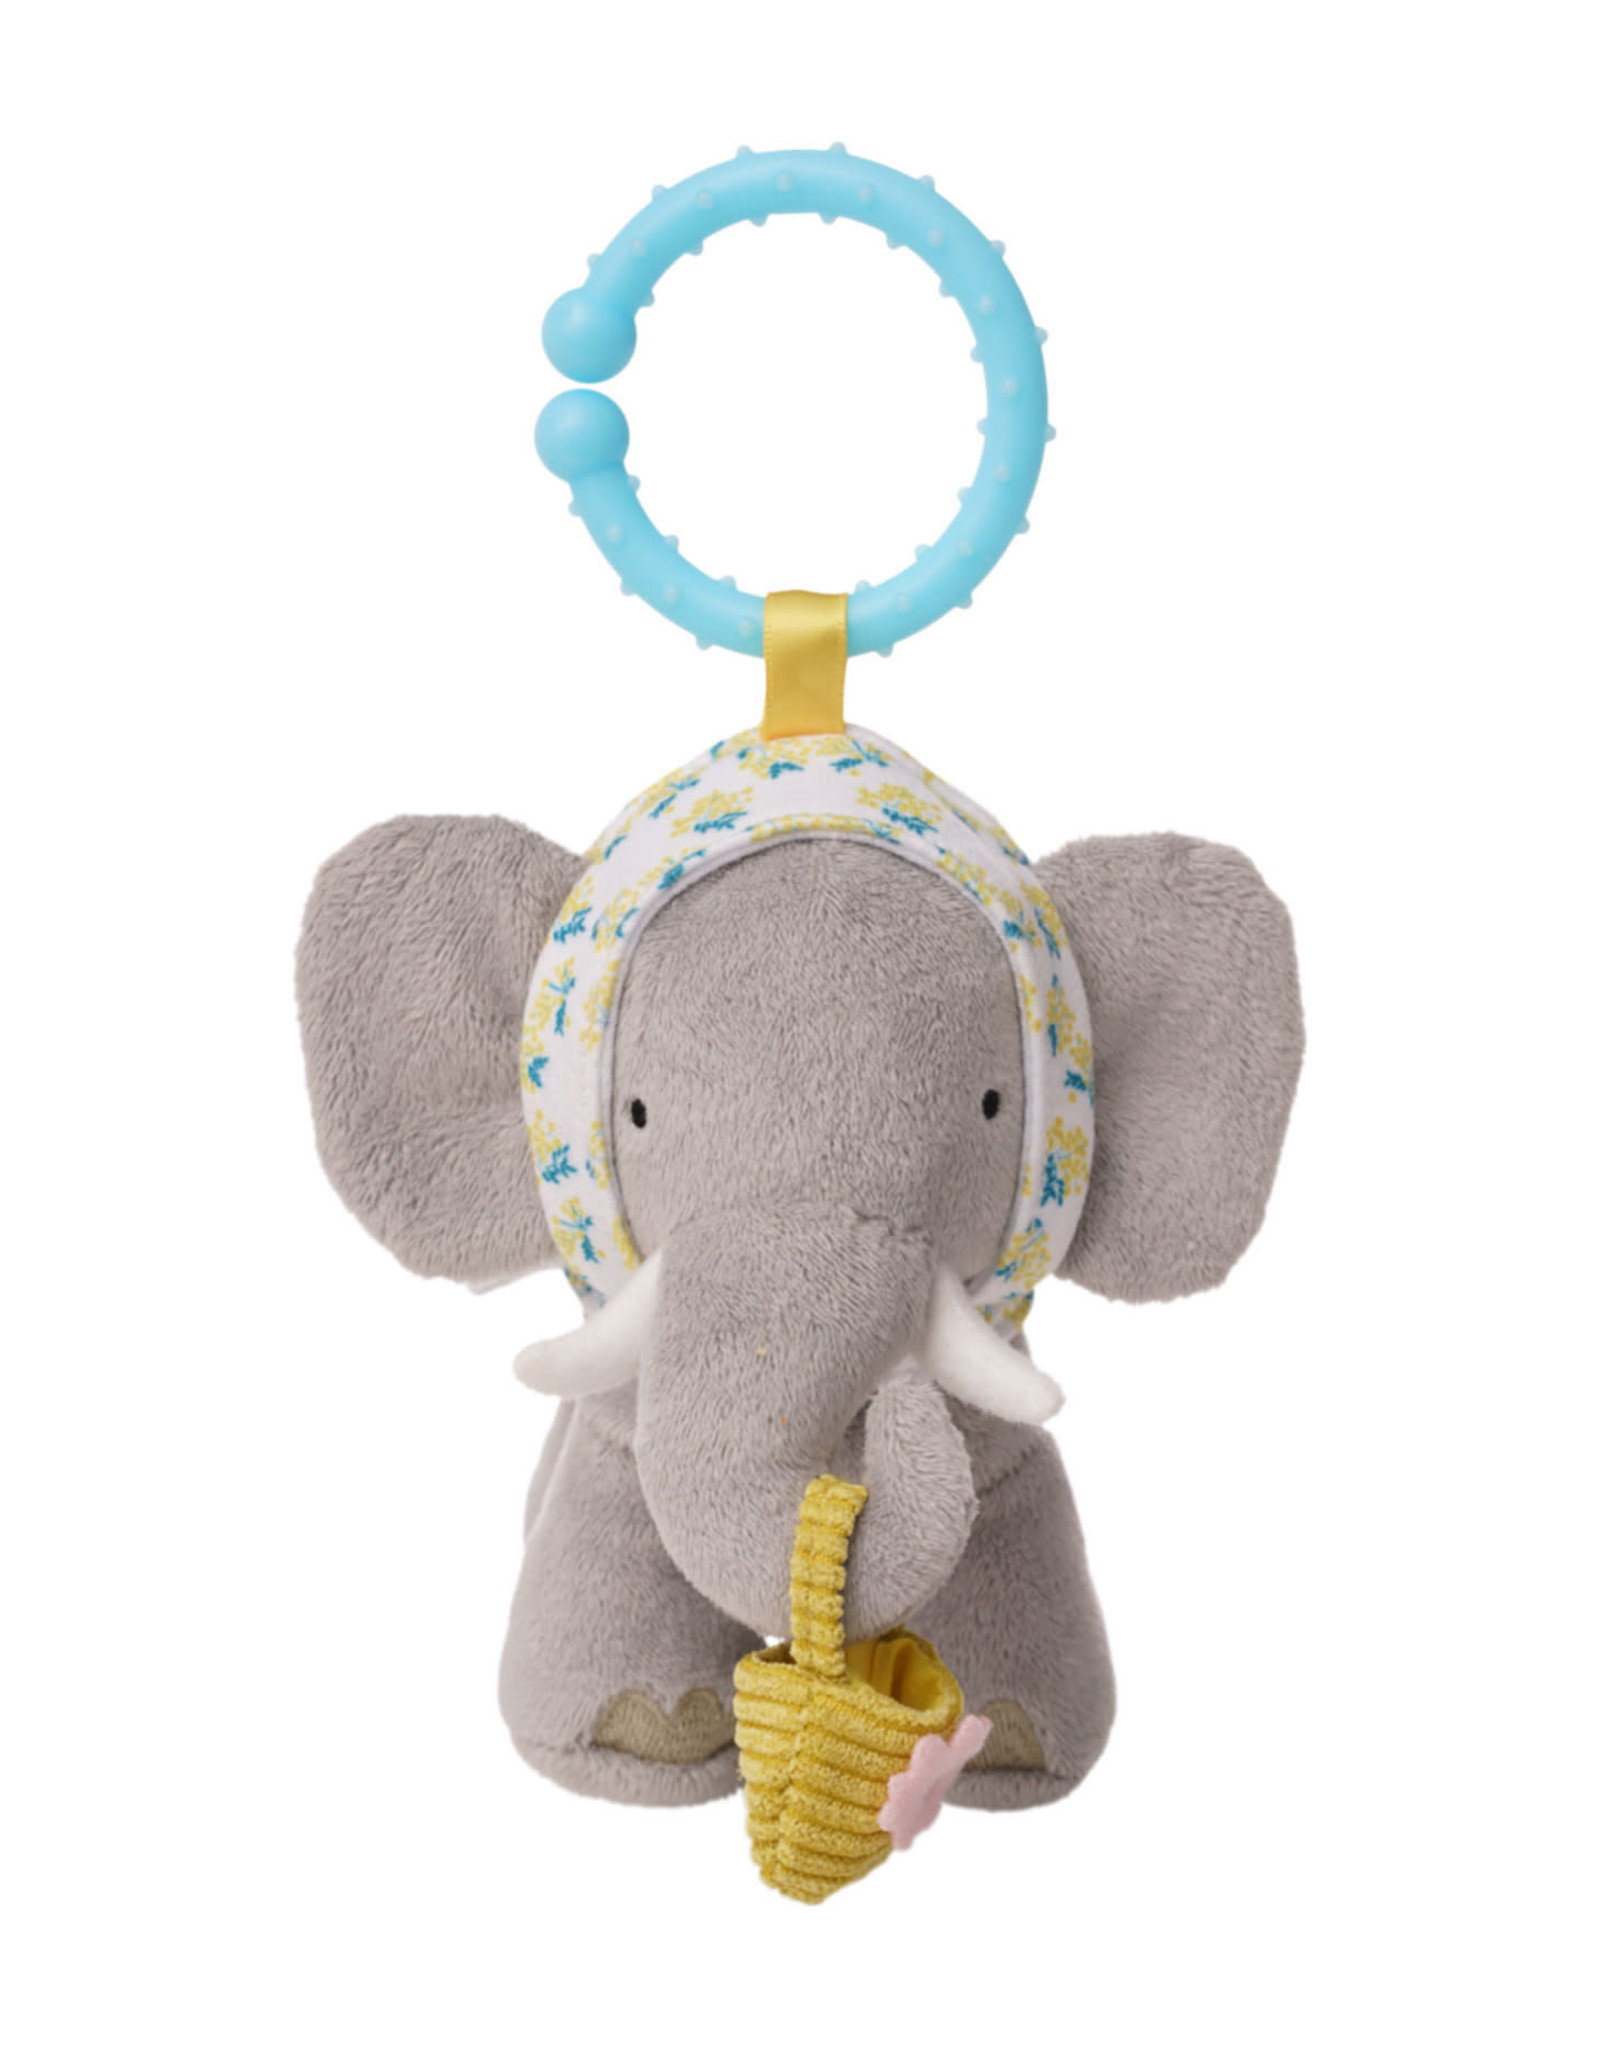 Manhattan Toy FAIRYTALE ELEPHANT TAKE ALONG TOY